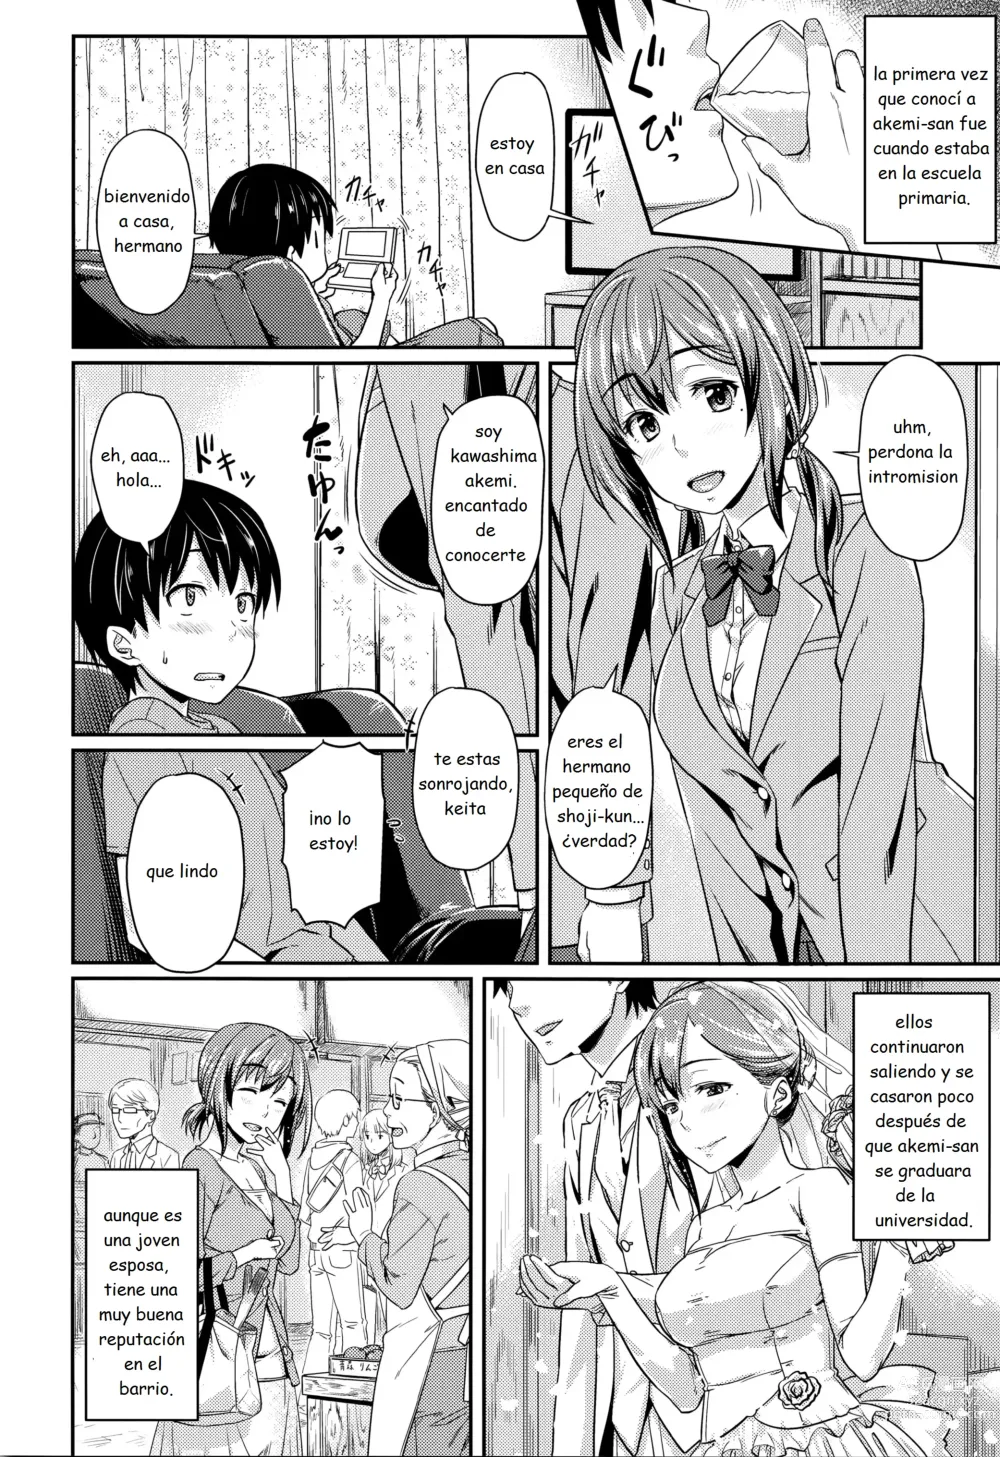 Page 20 of doujinshi Aimitsu Carameliser